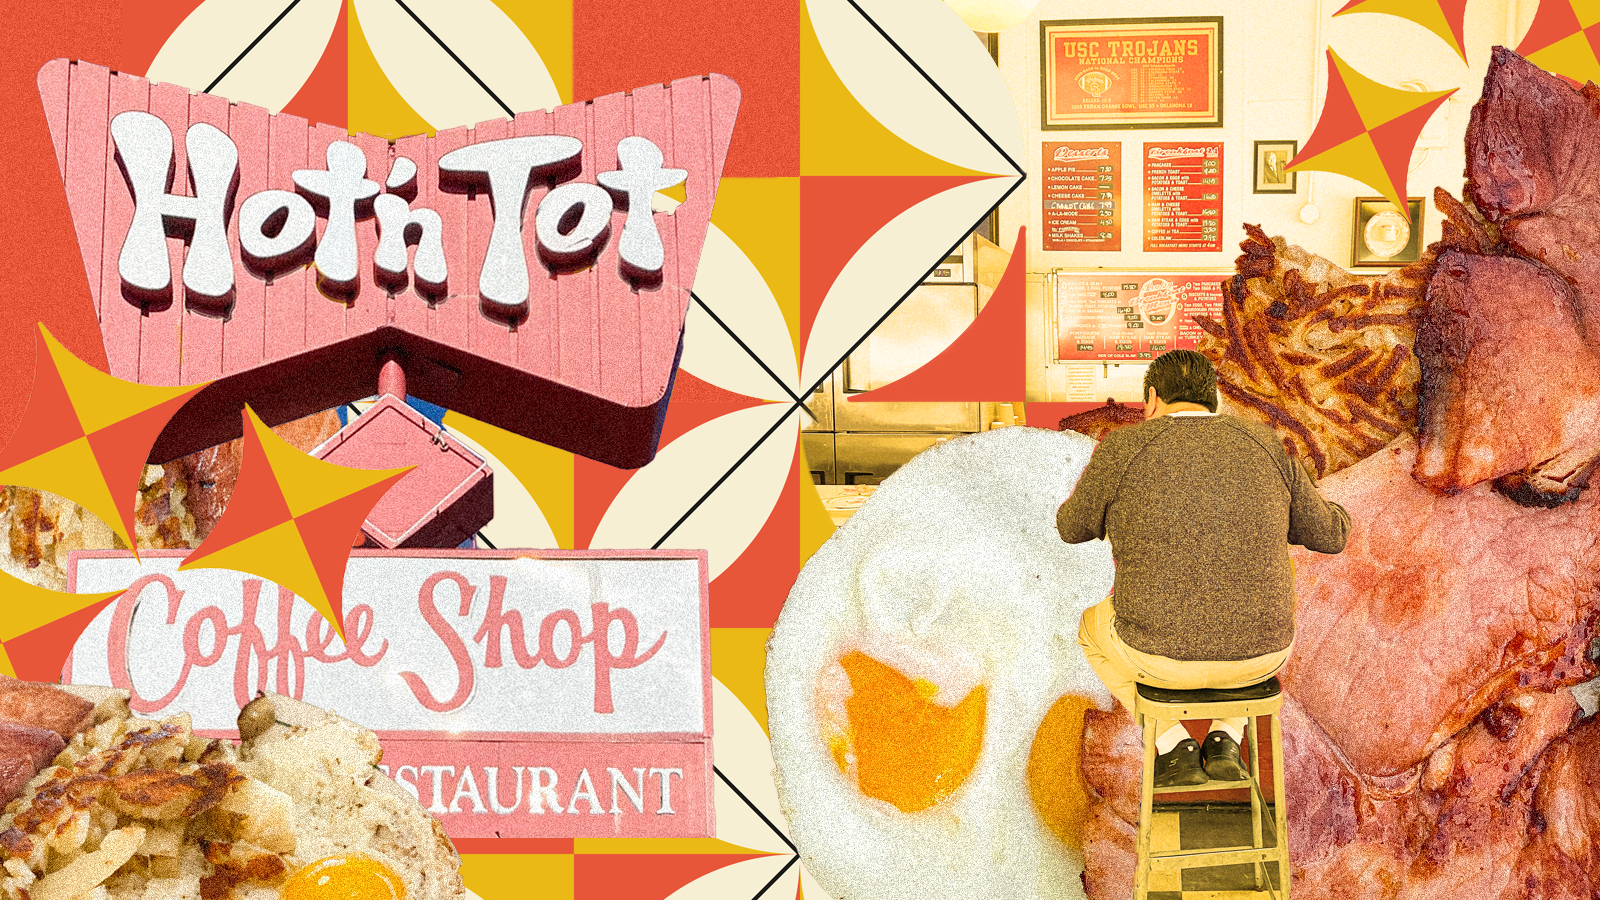 Colorful illustration of a Googie diner sign, ham steak, and eggs.